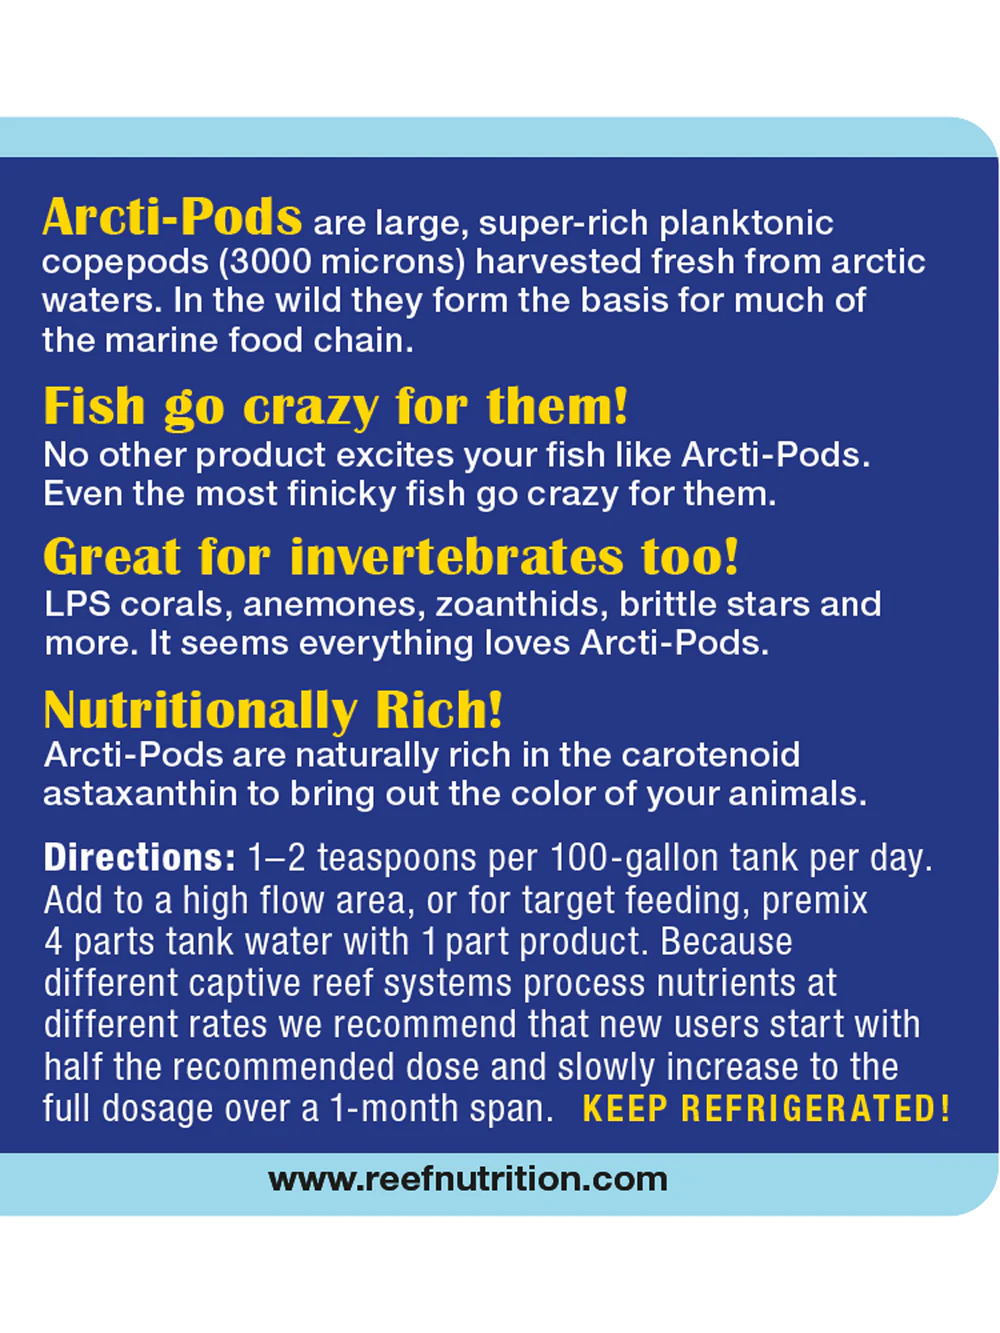 Reef nutrition Arctic pods 6 oz